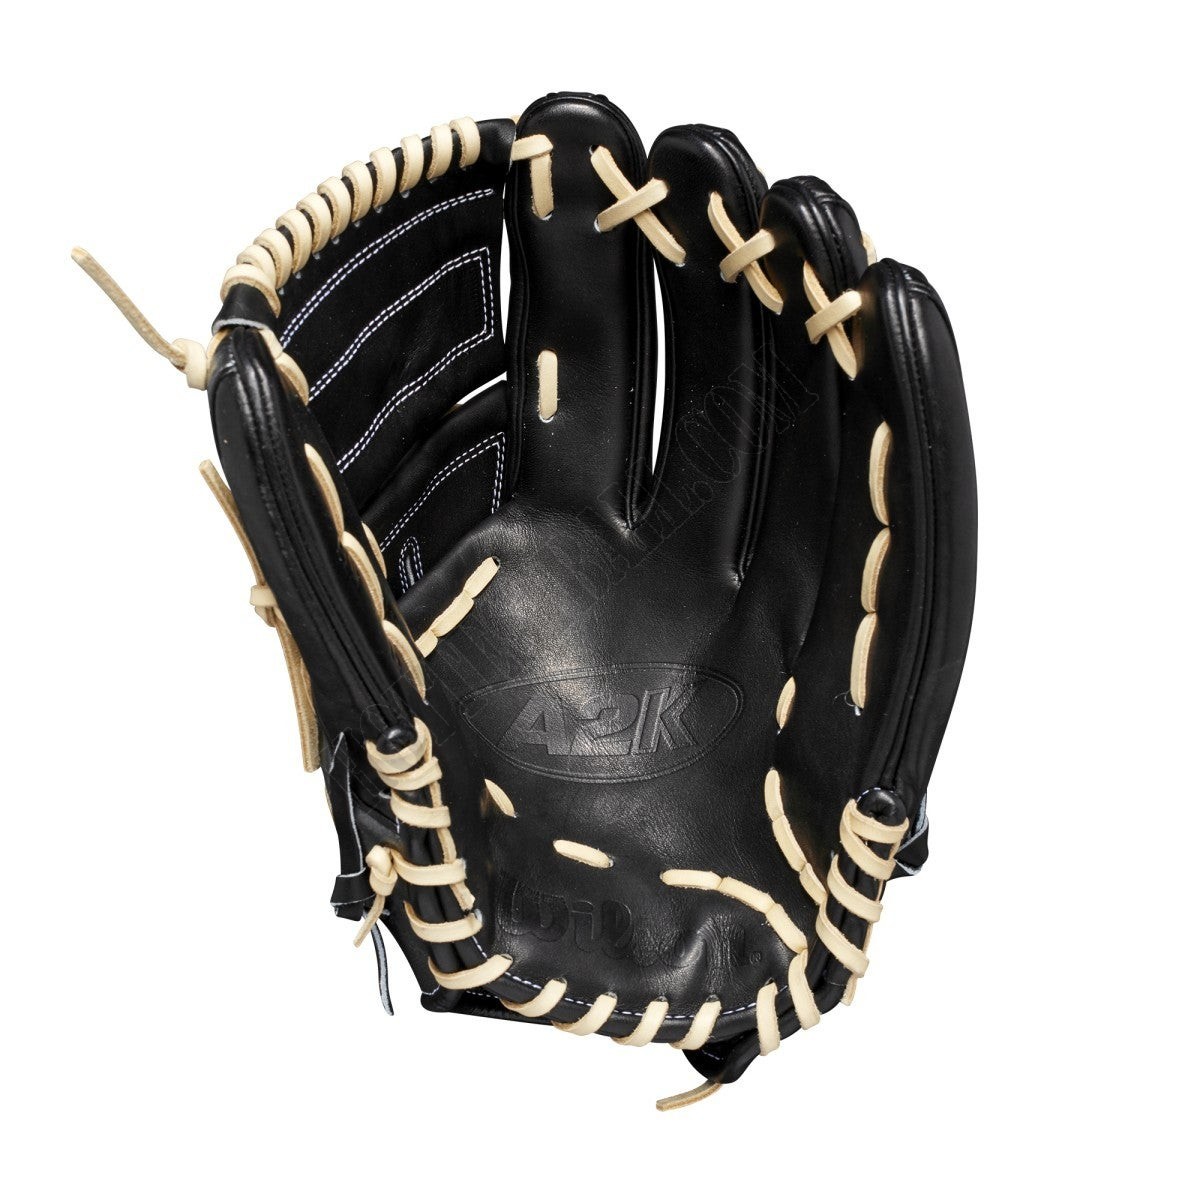 2022 A2K B2 12" Pitcher's Baseball Glove ● Wilson Promotions - -2